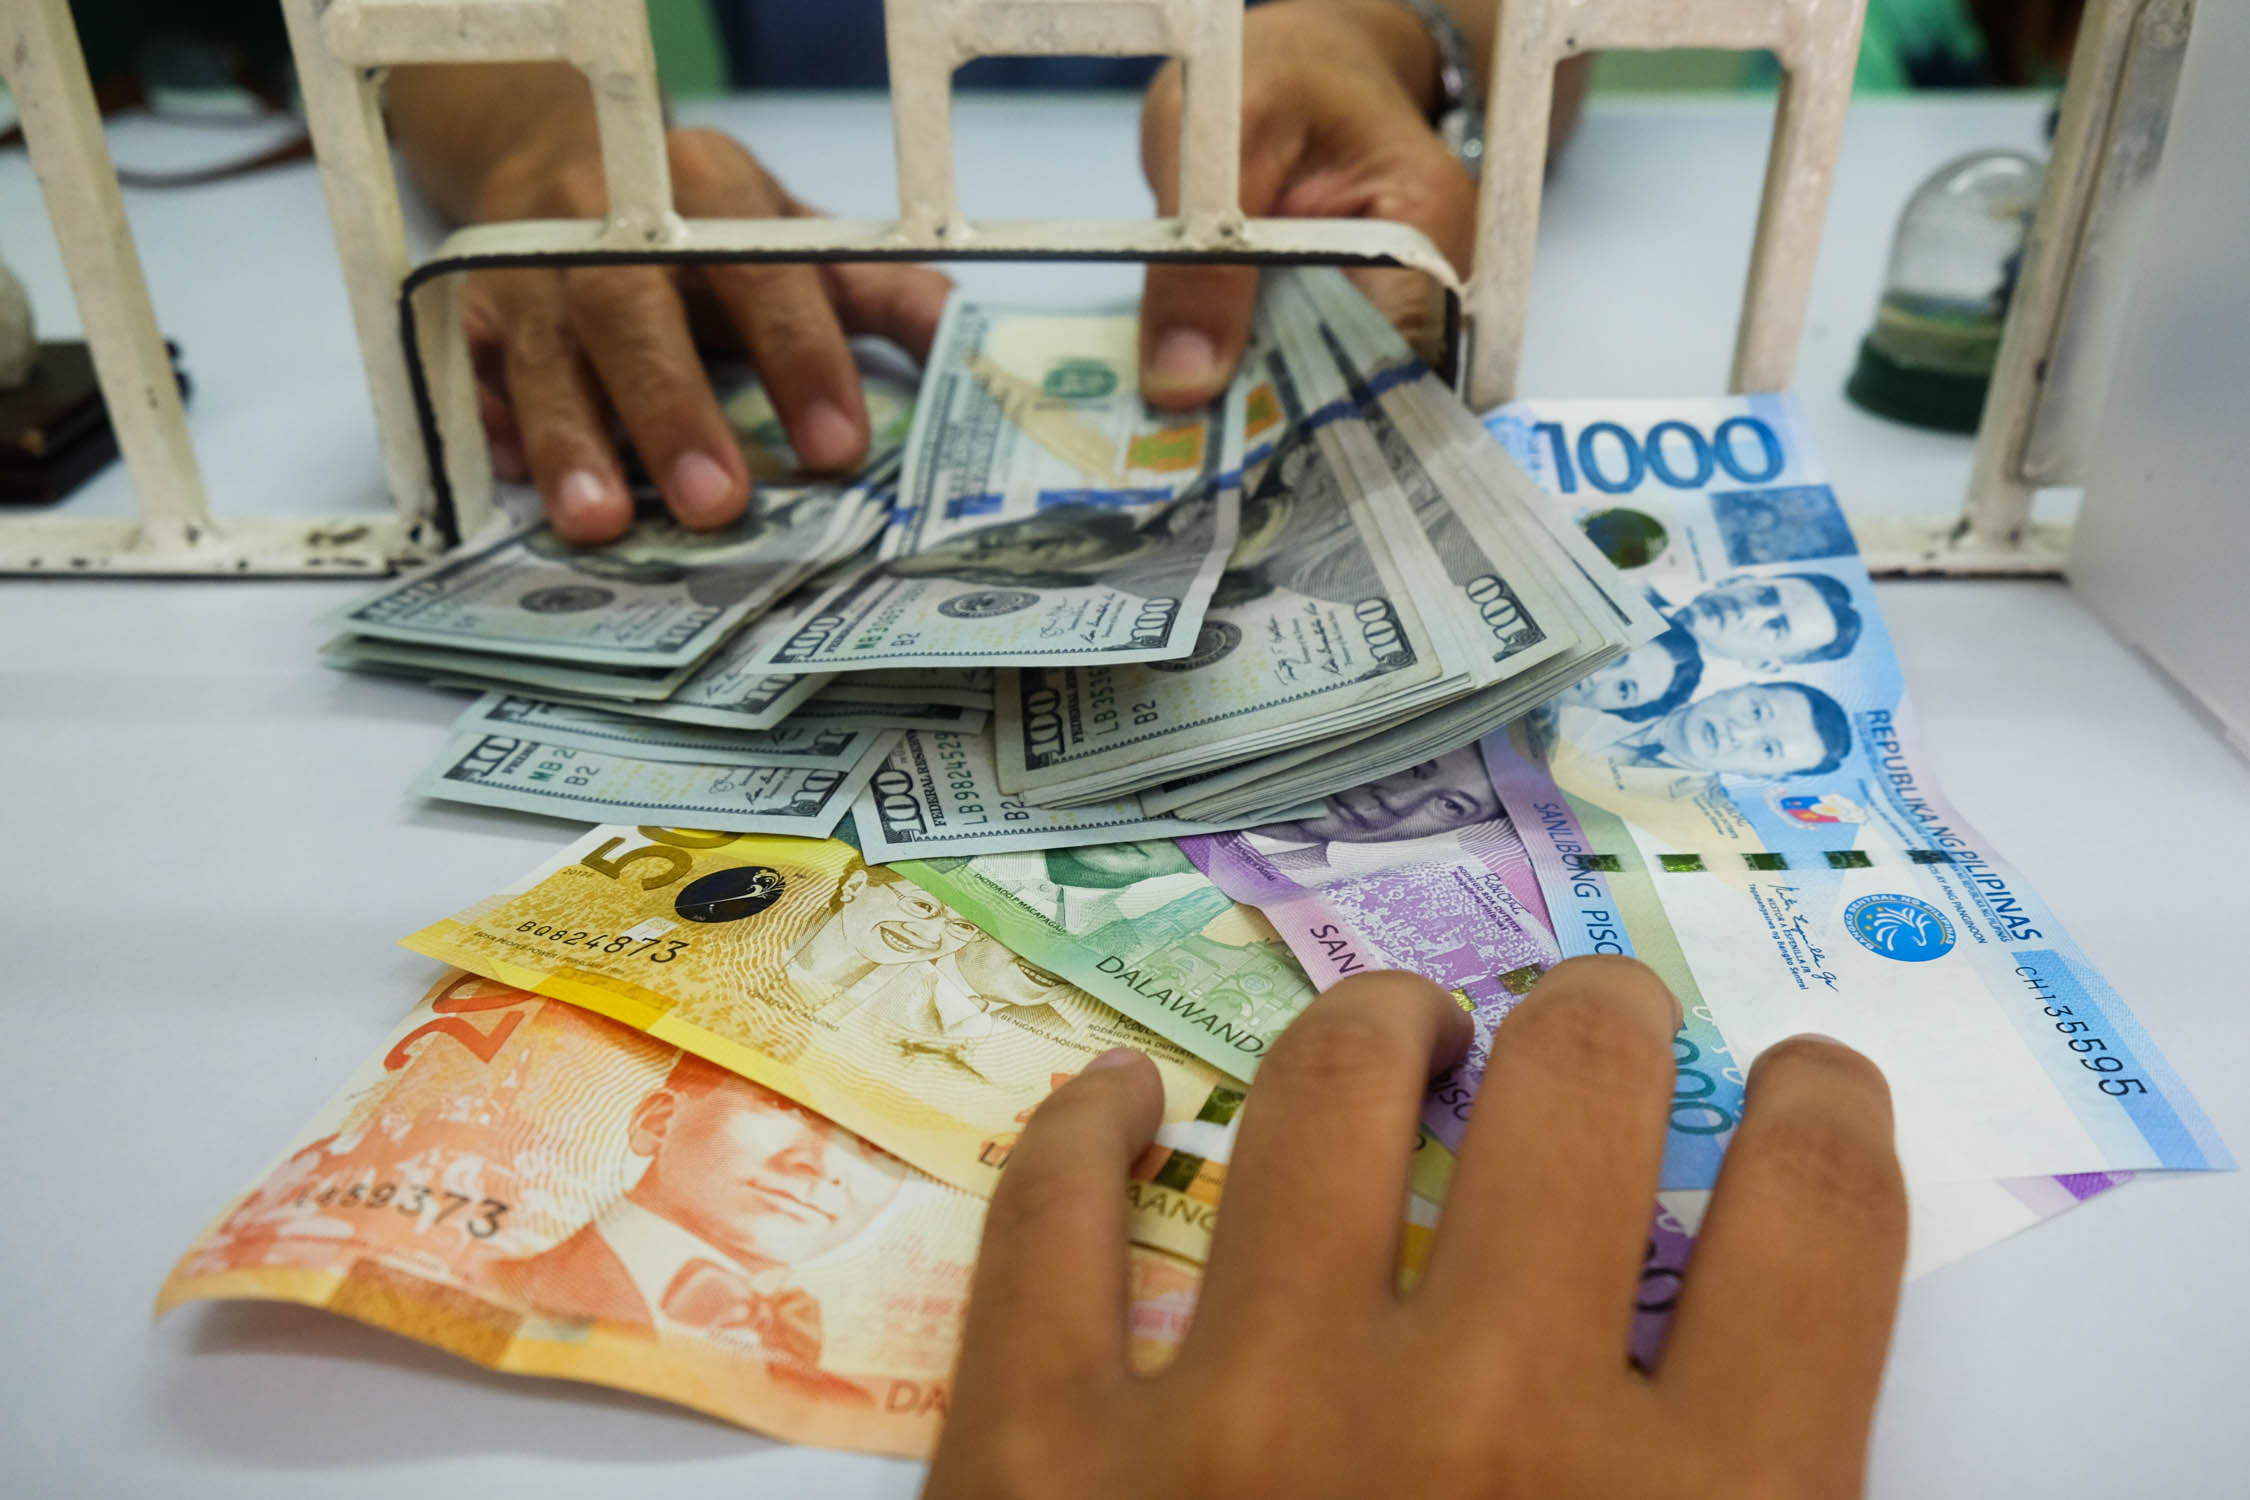 PH peso hits 54.065 per 1 US dollar Inquirer News